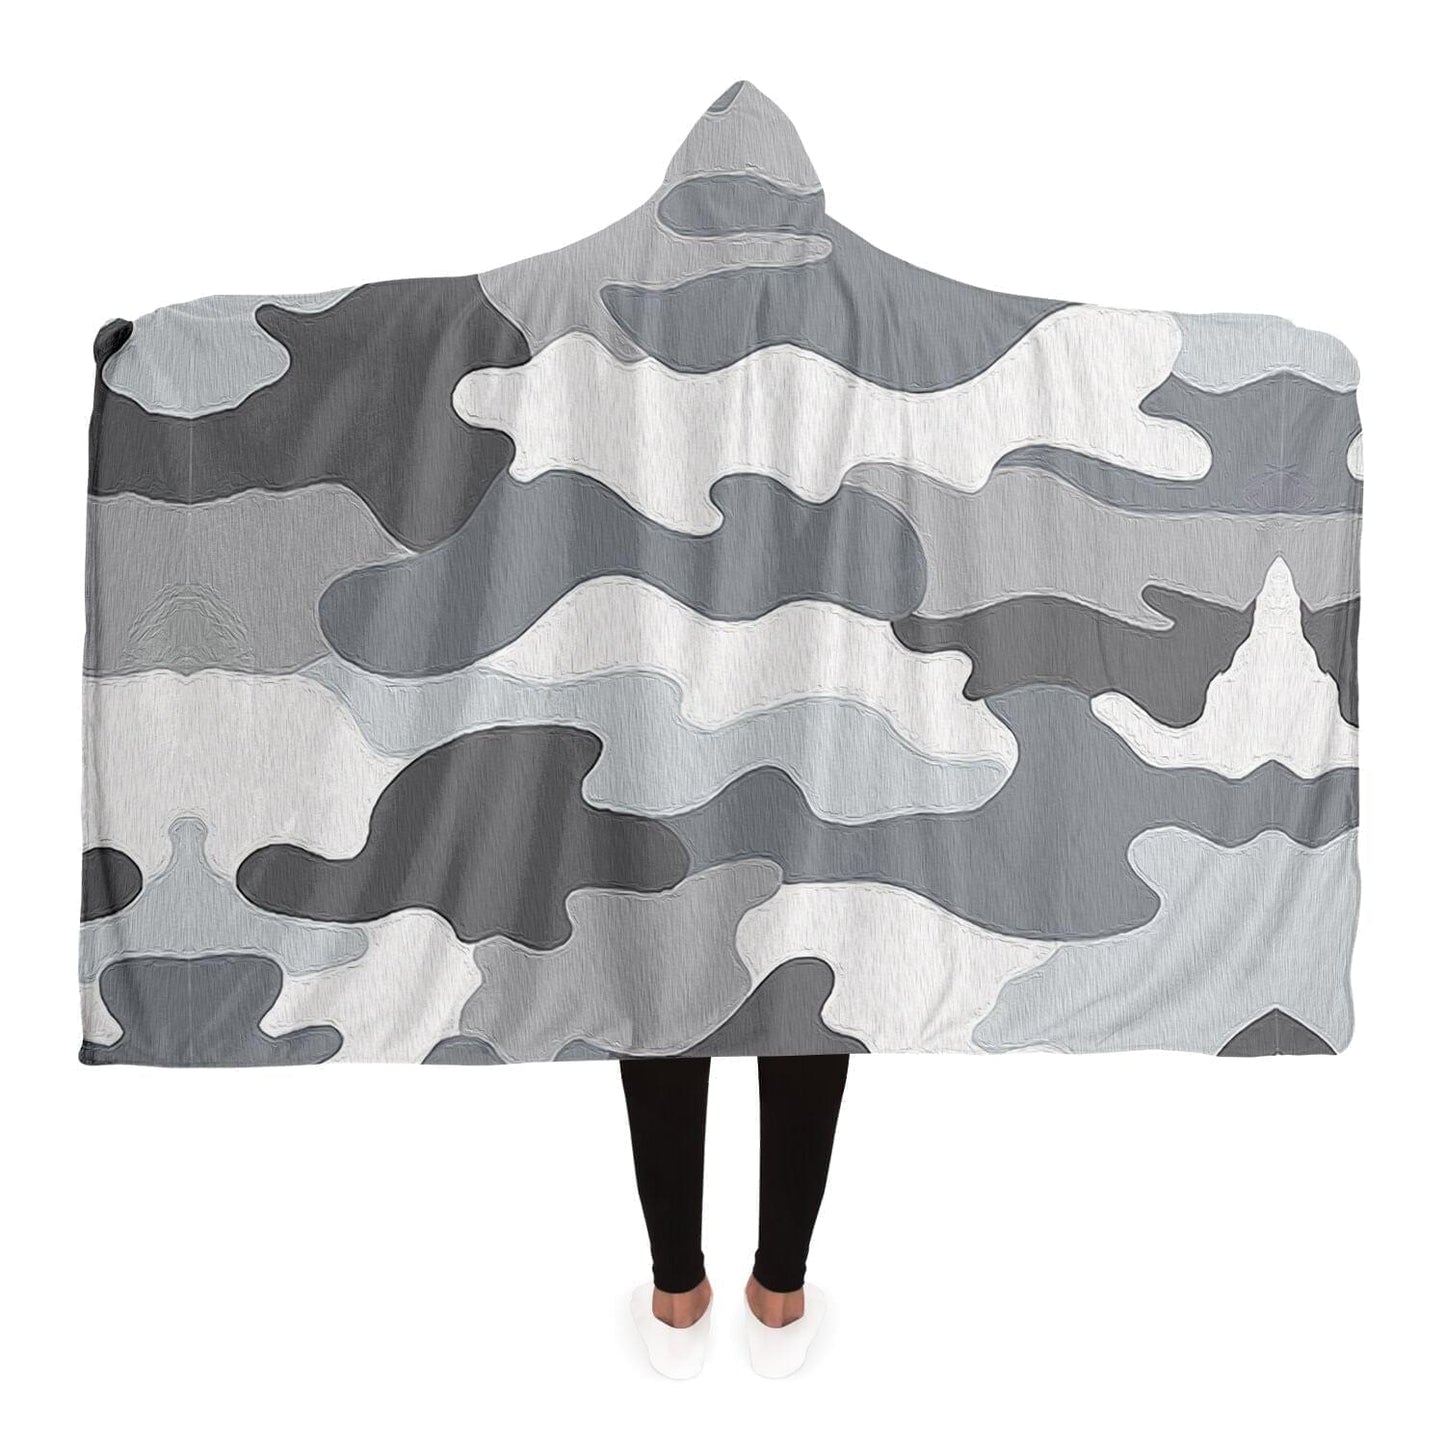 Camouflage Grey Hooded Blanket Gift Idea HOO-DESIGN.SHOP